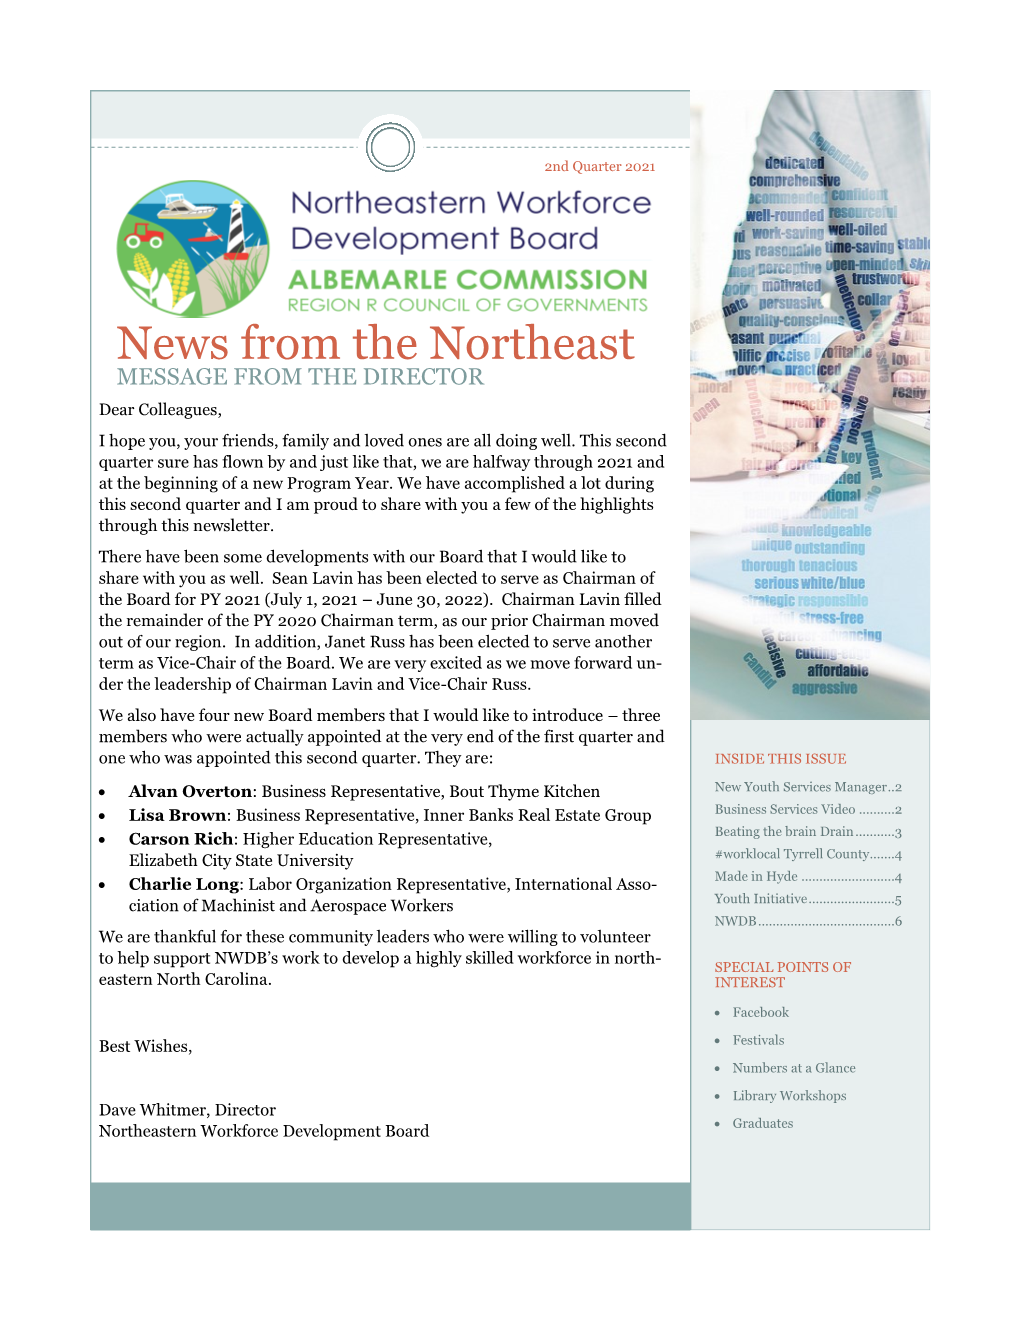 NWDB Newsletter